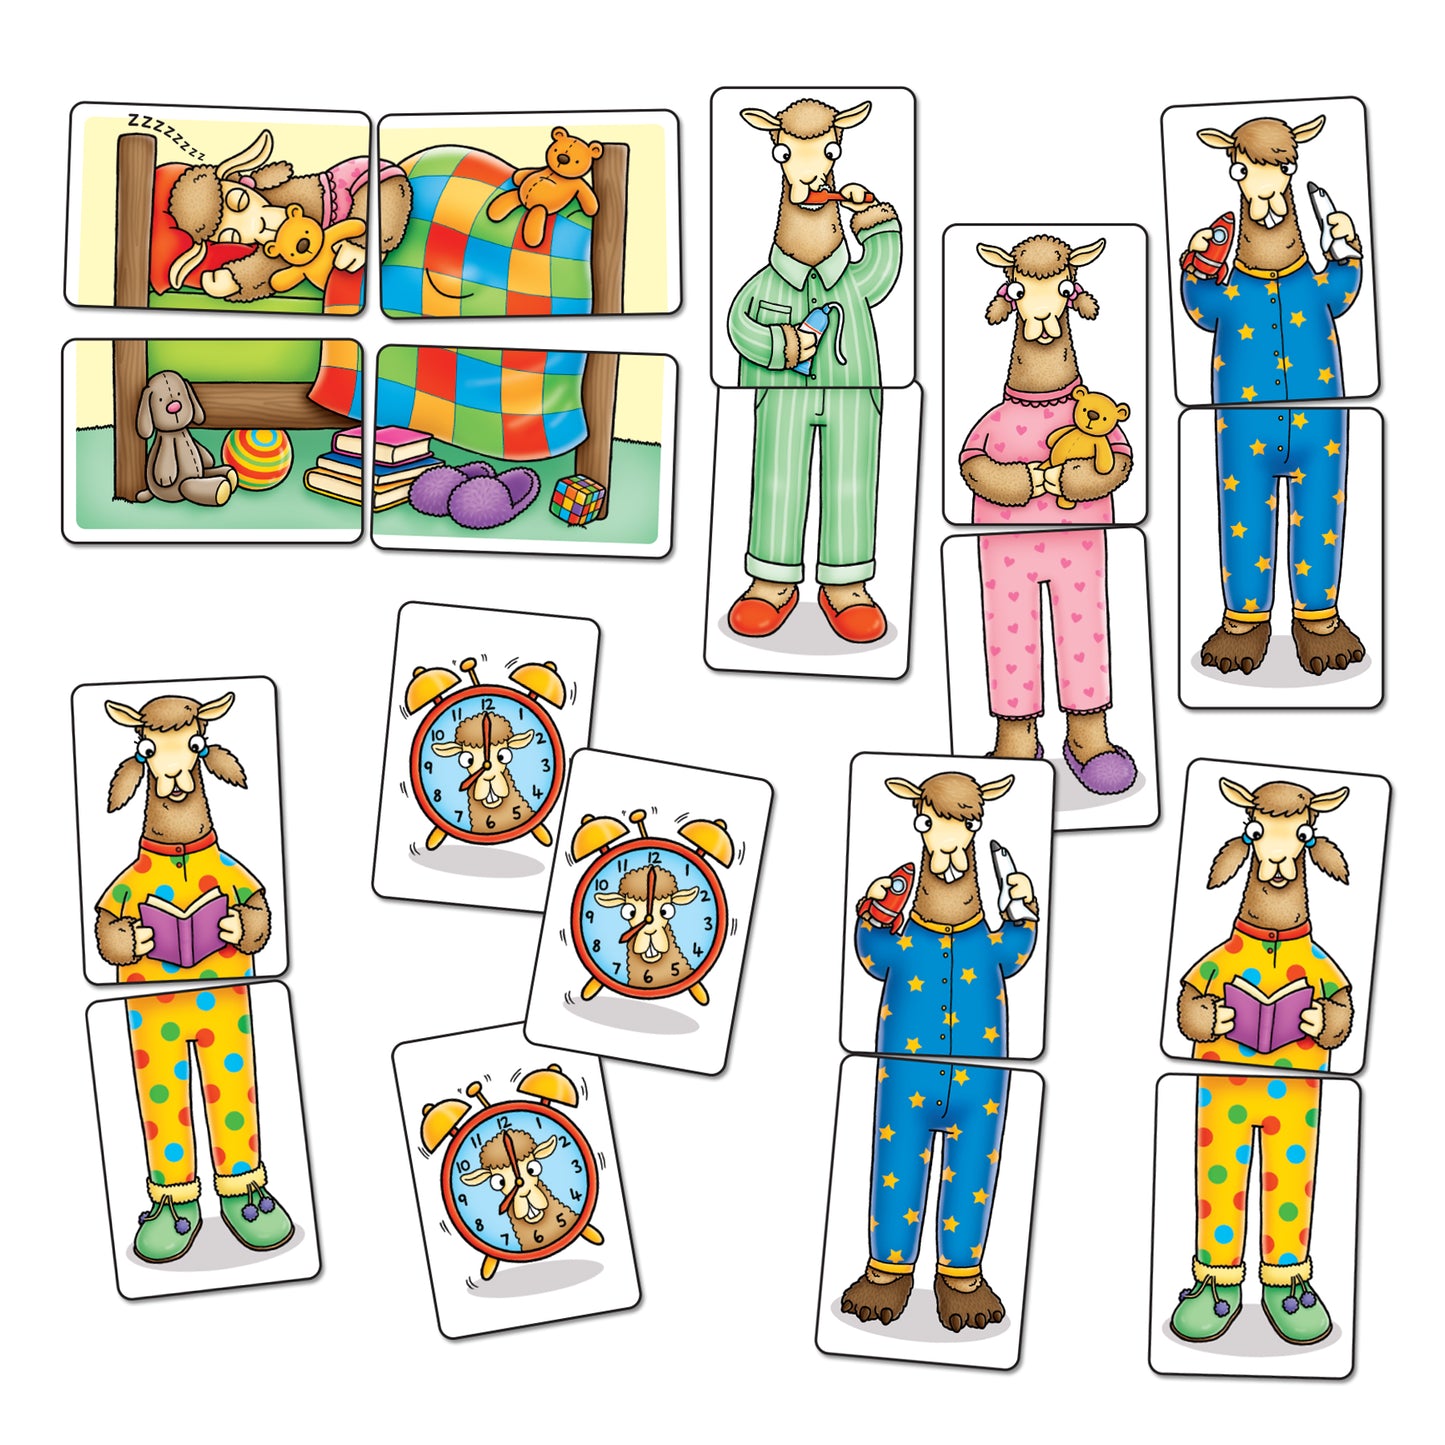 Orchard Toys Llamas in Pyjamas Mini Matching Game